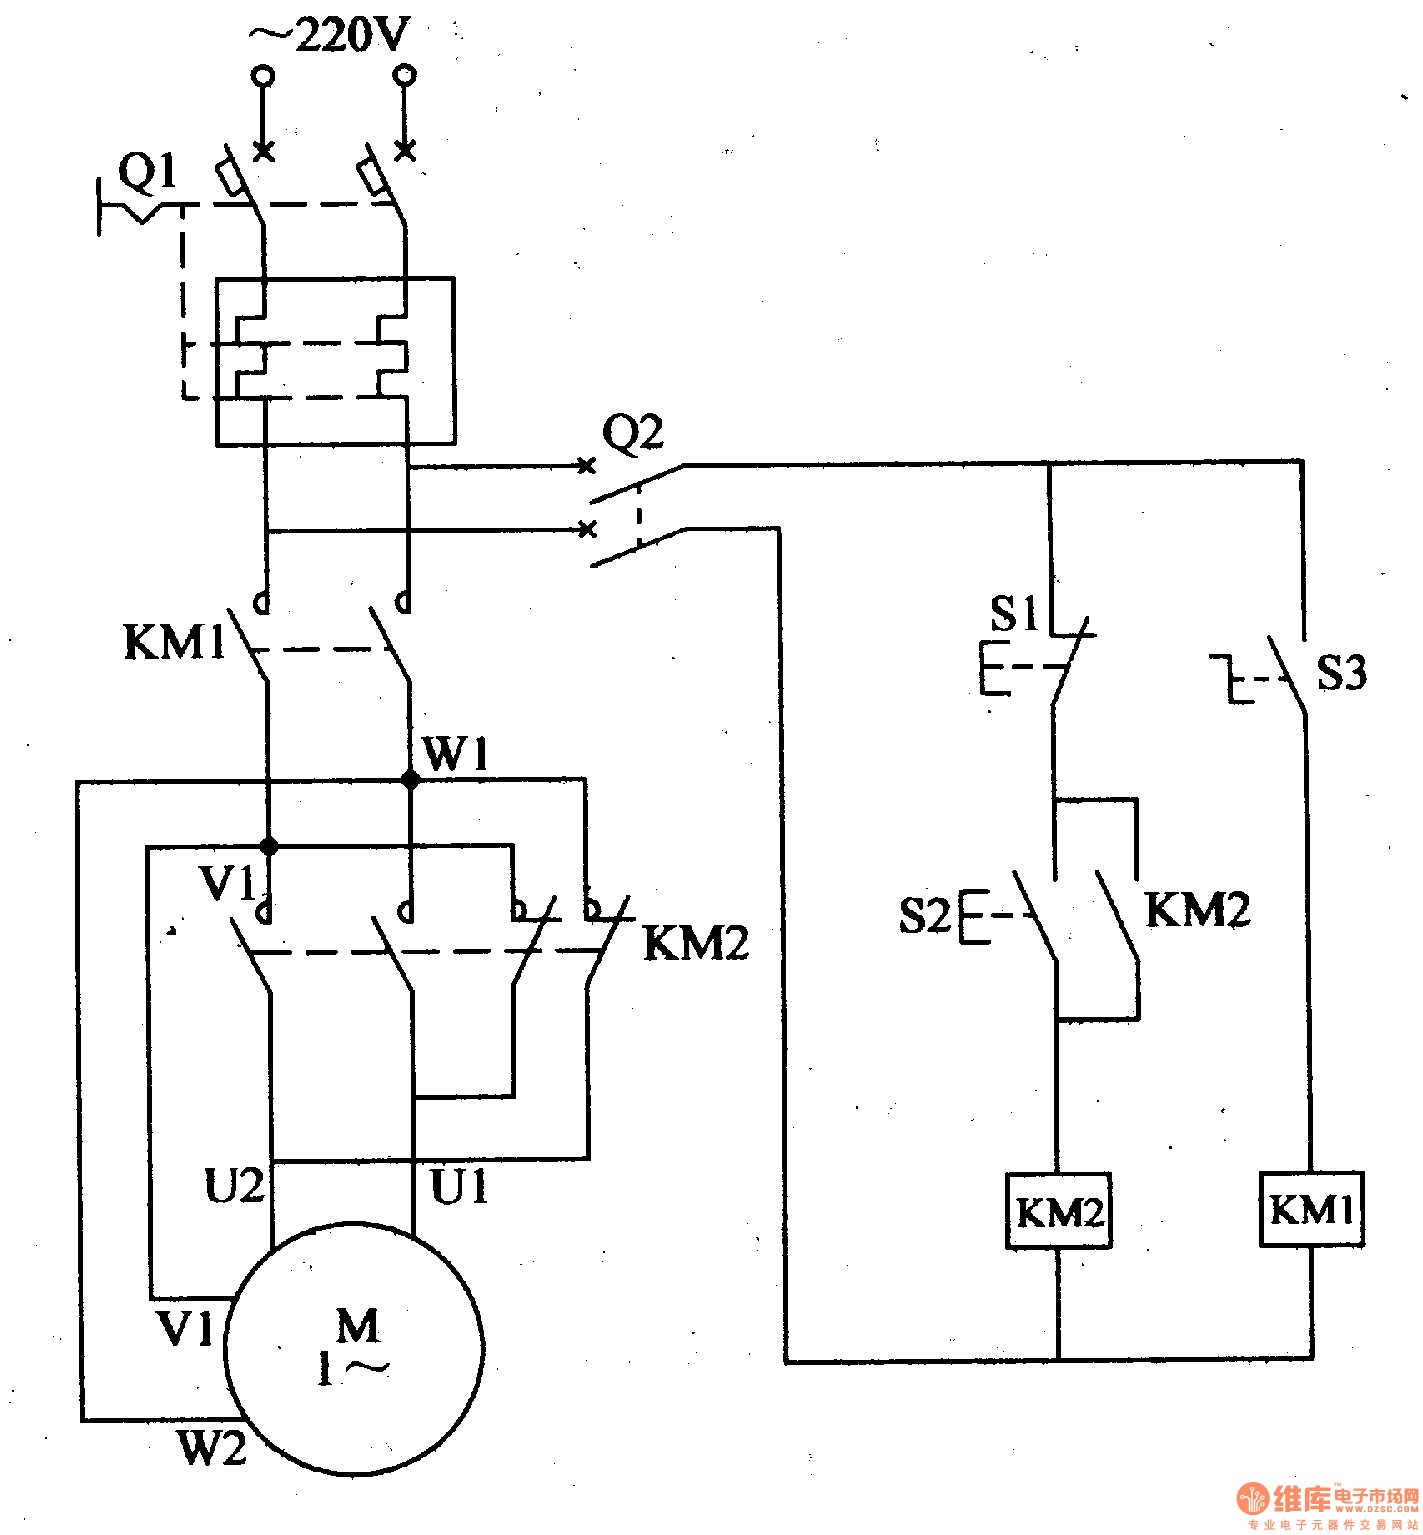 Wiring Diagram for Single Phase Motor Wiring Diagram Single Phase Motor Reversing Switch Wiring